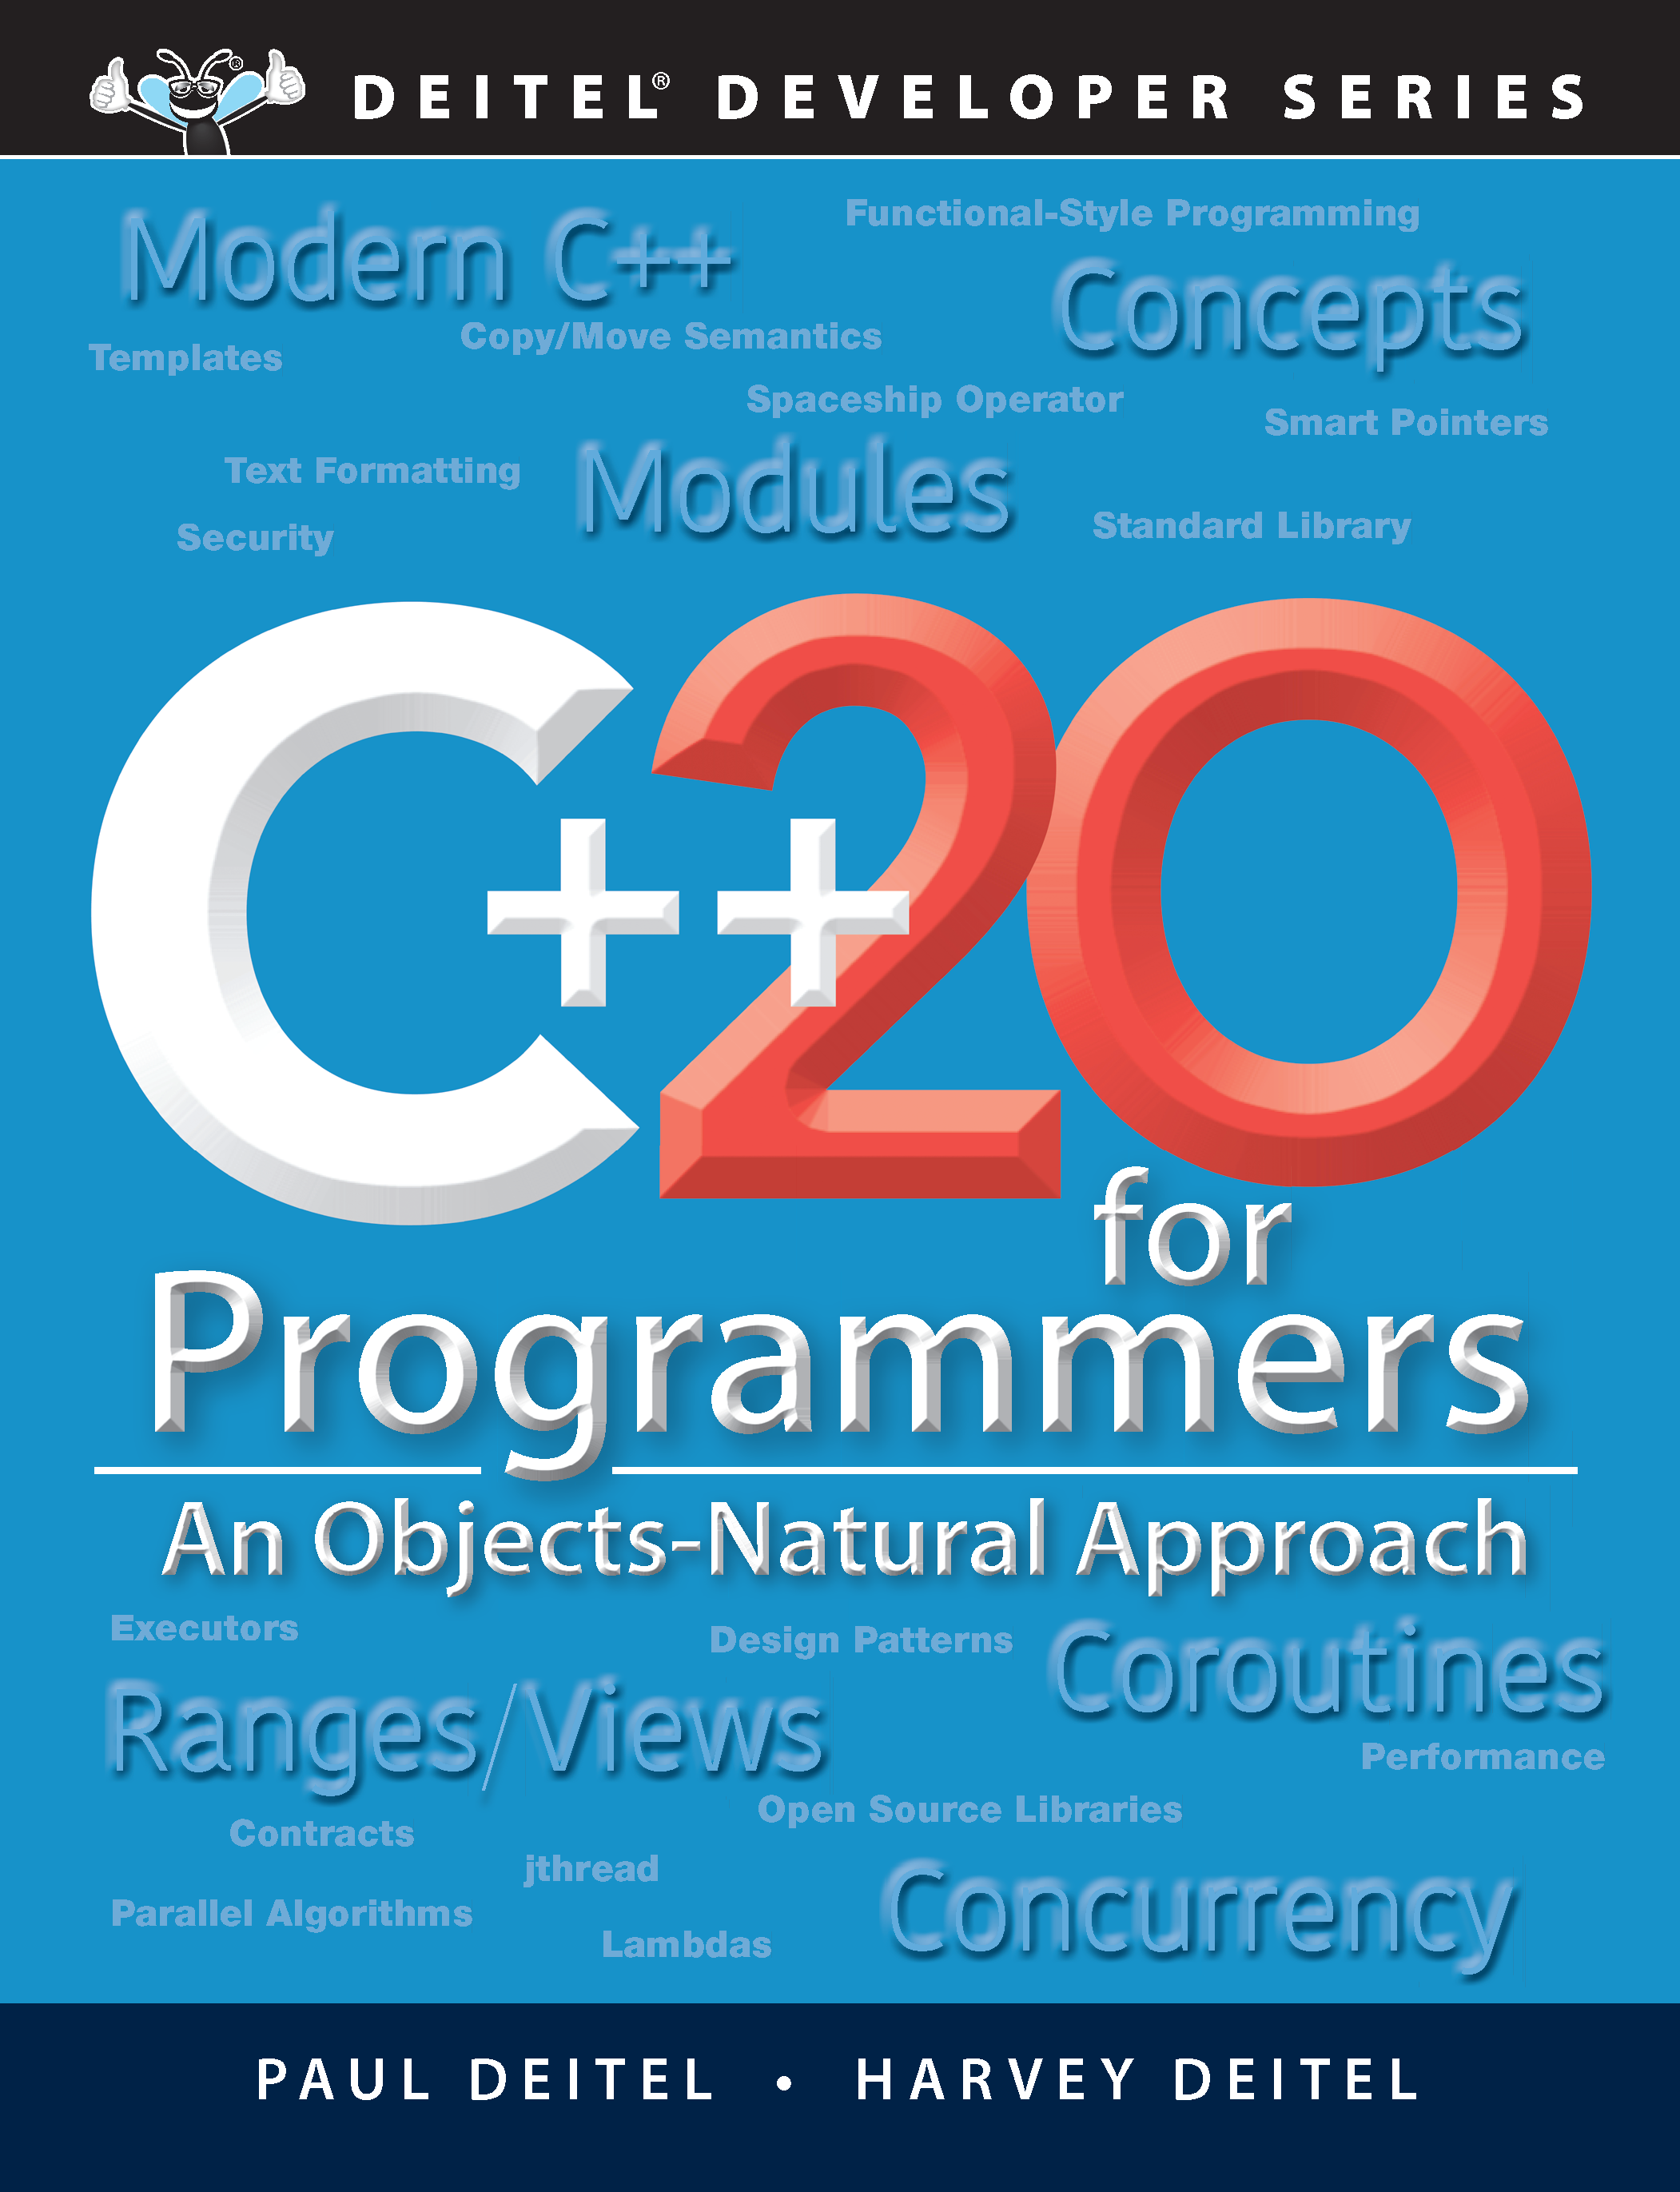 C++20 for Programmers - Deitel & Associates, Inc.